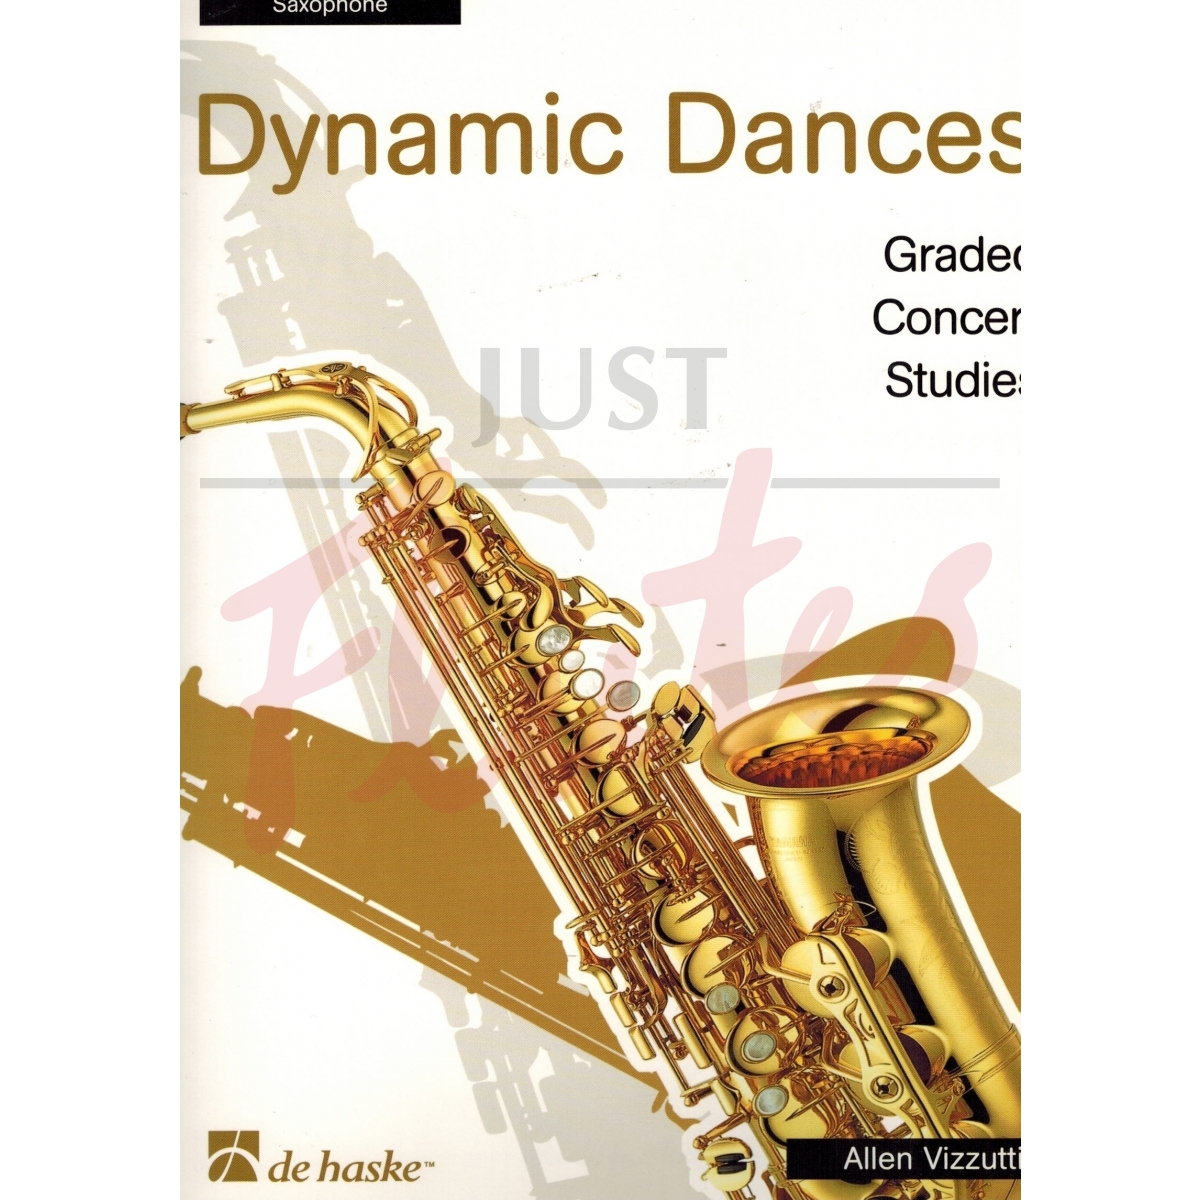 Dynamic Dances: Graded Concert Studies for Saxophone